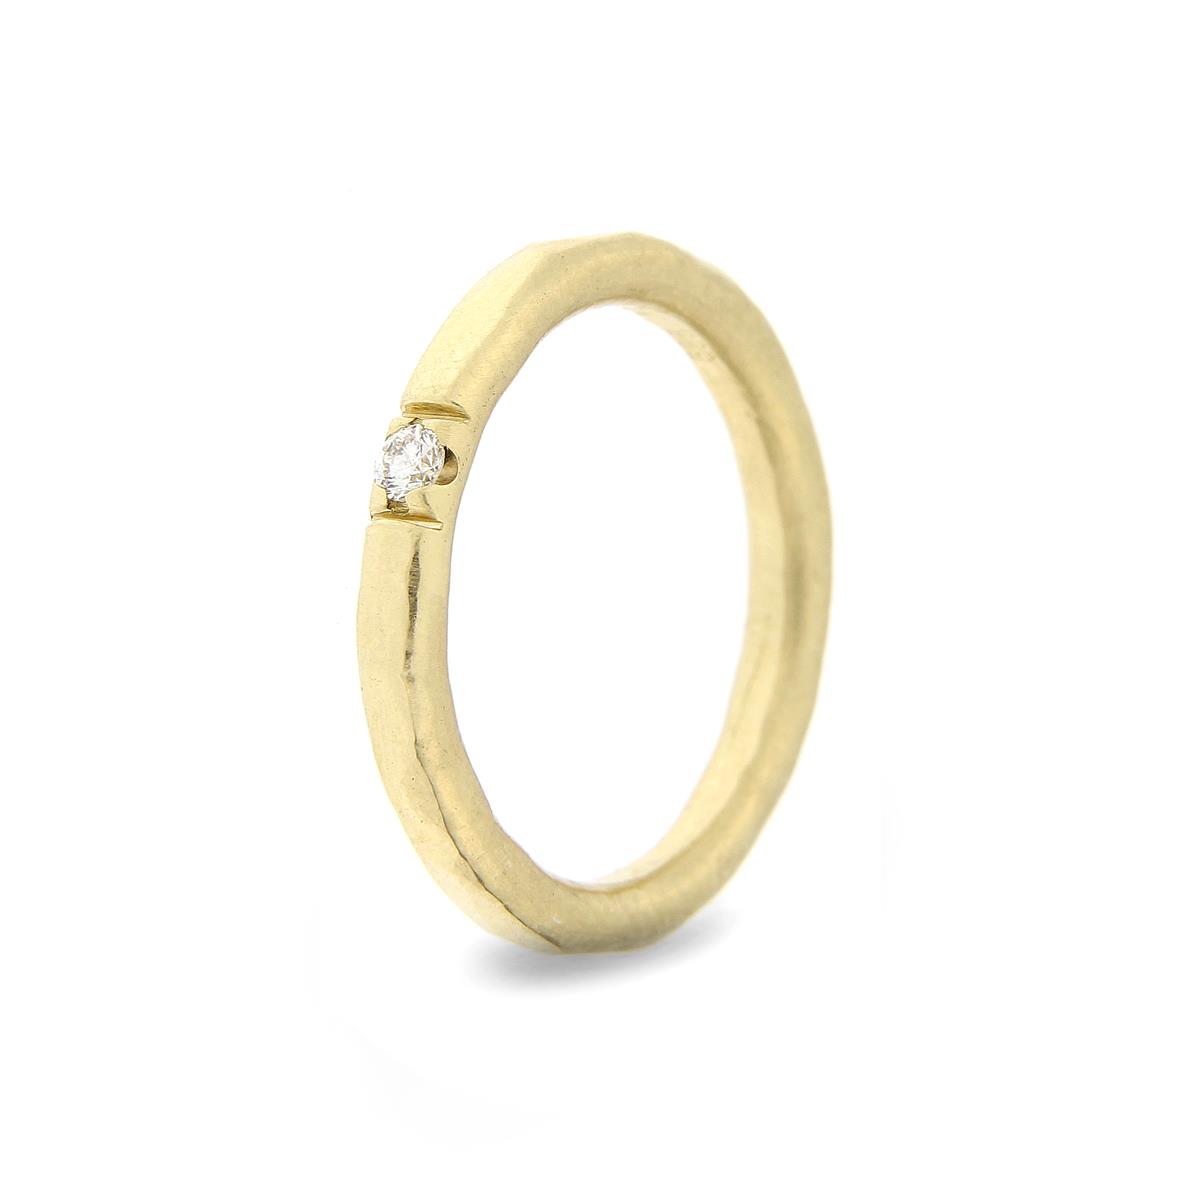 Katie g. Jewellery - Hammered Ring 2,5mm - Champ Gold 1 + 1 Diamond